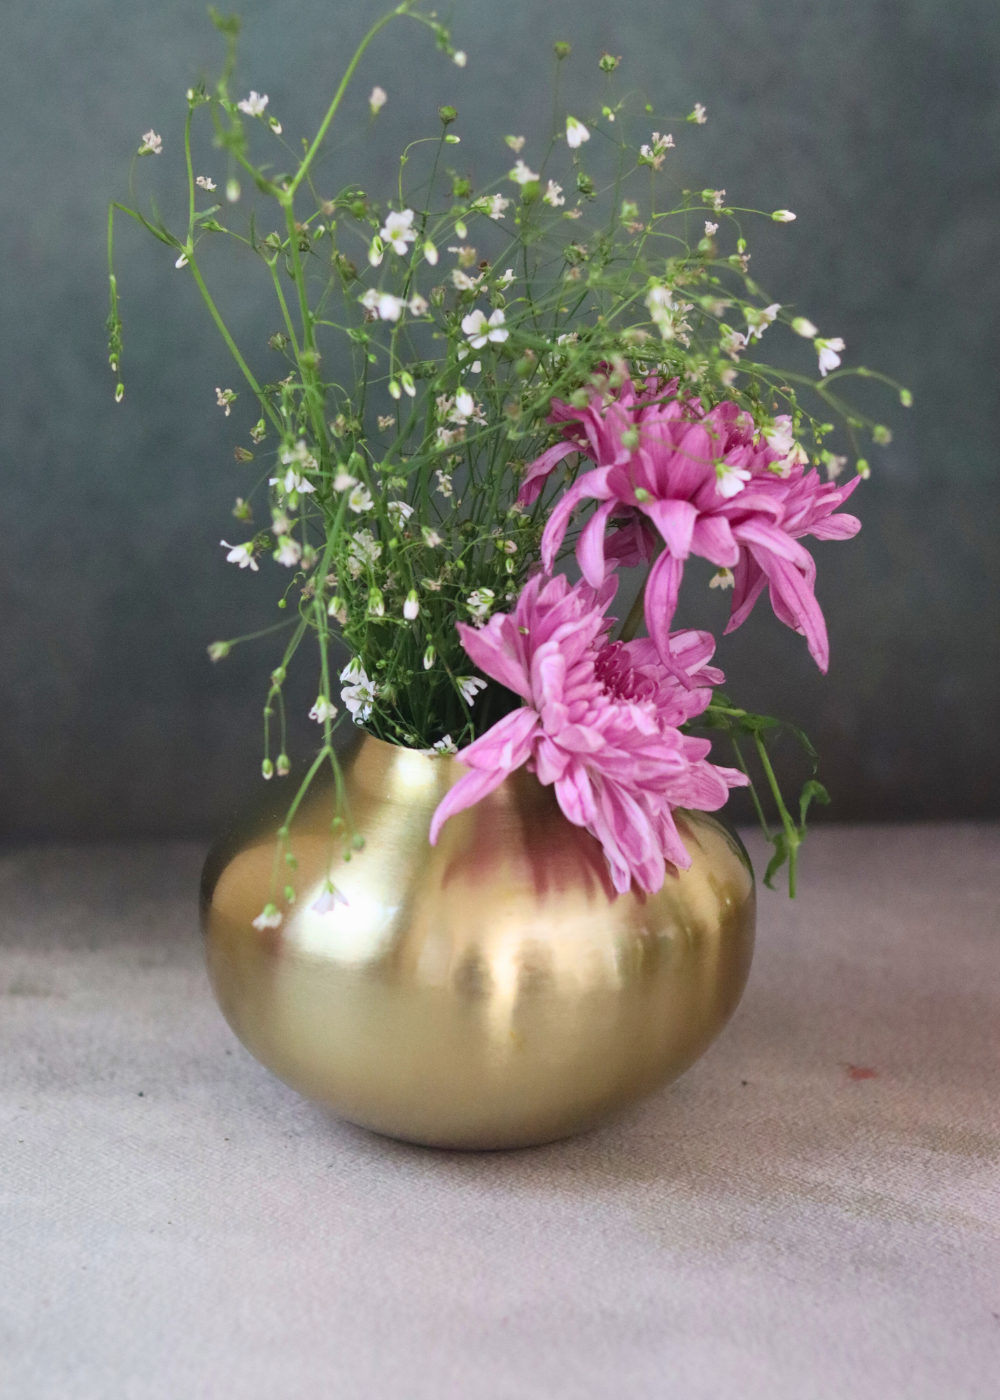 Handmade flower vase with flowers